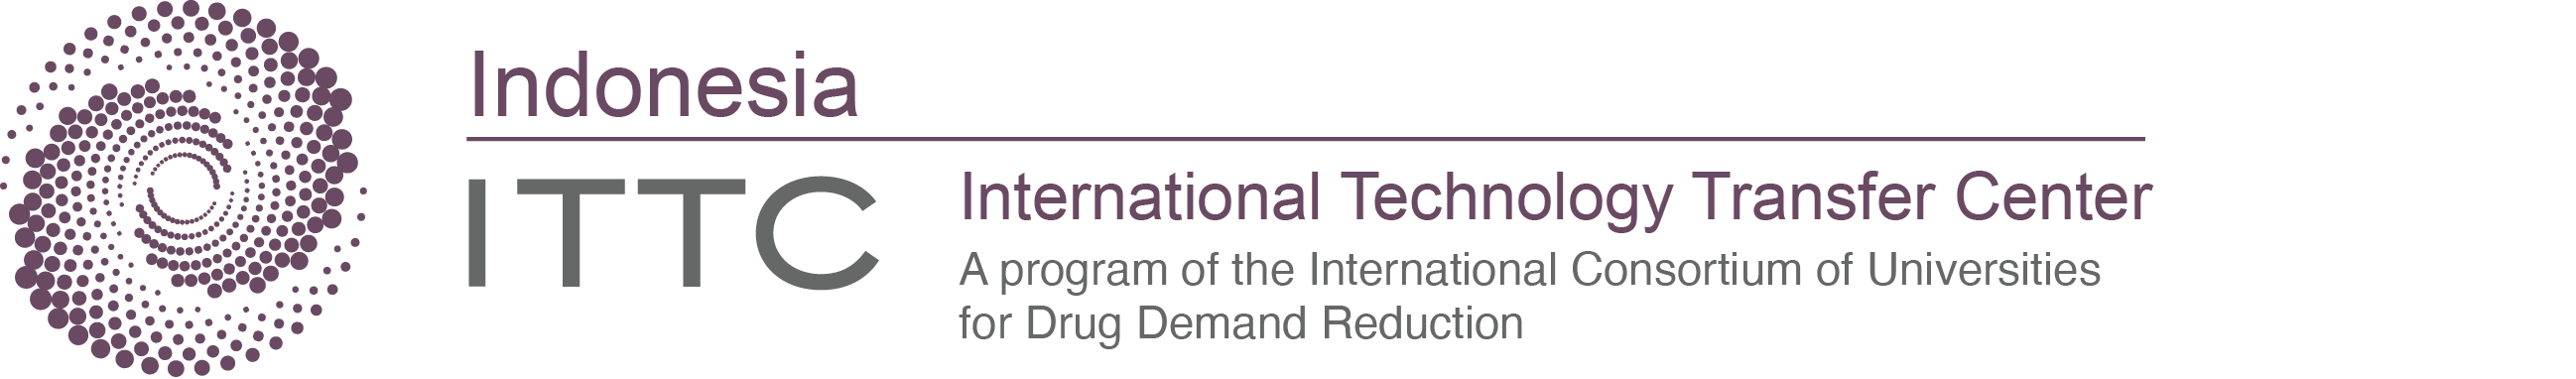 Indonesia International Technology Transfer Center Logo